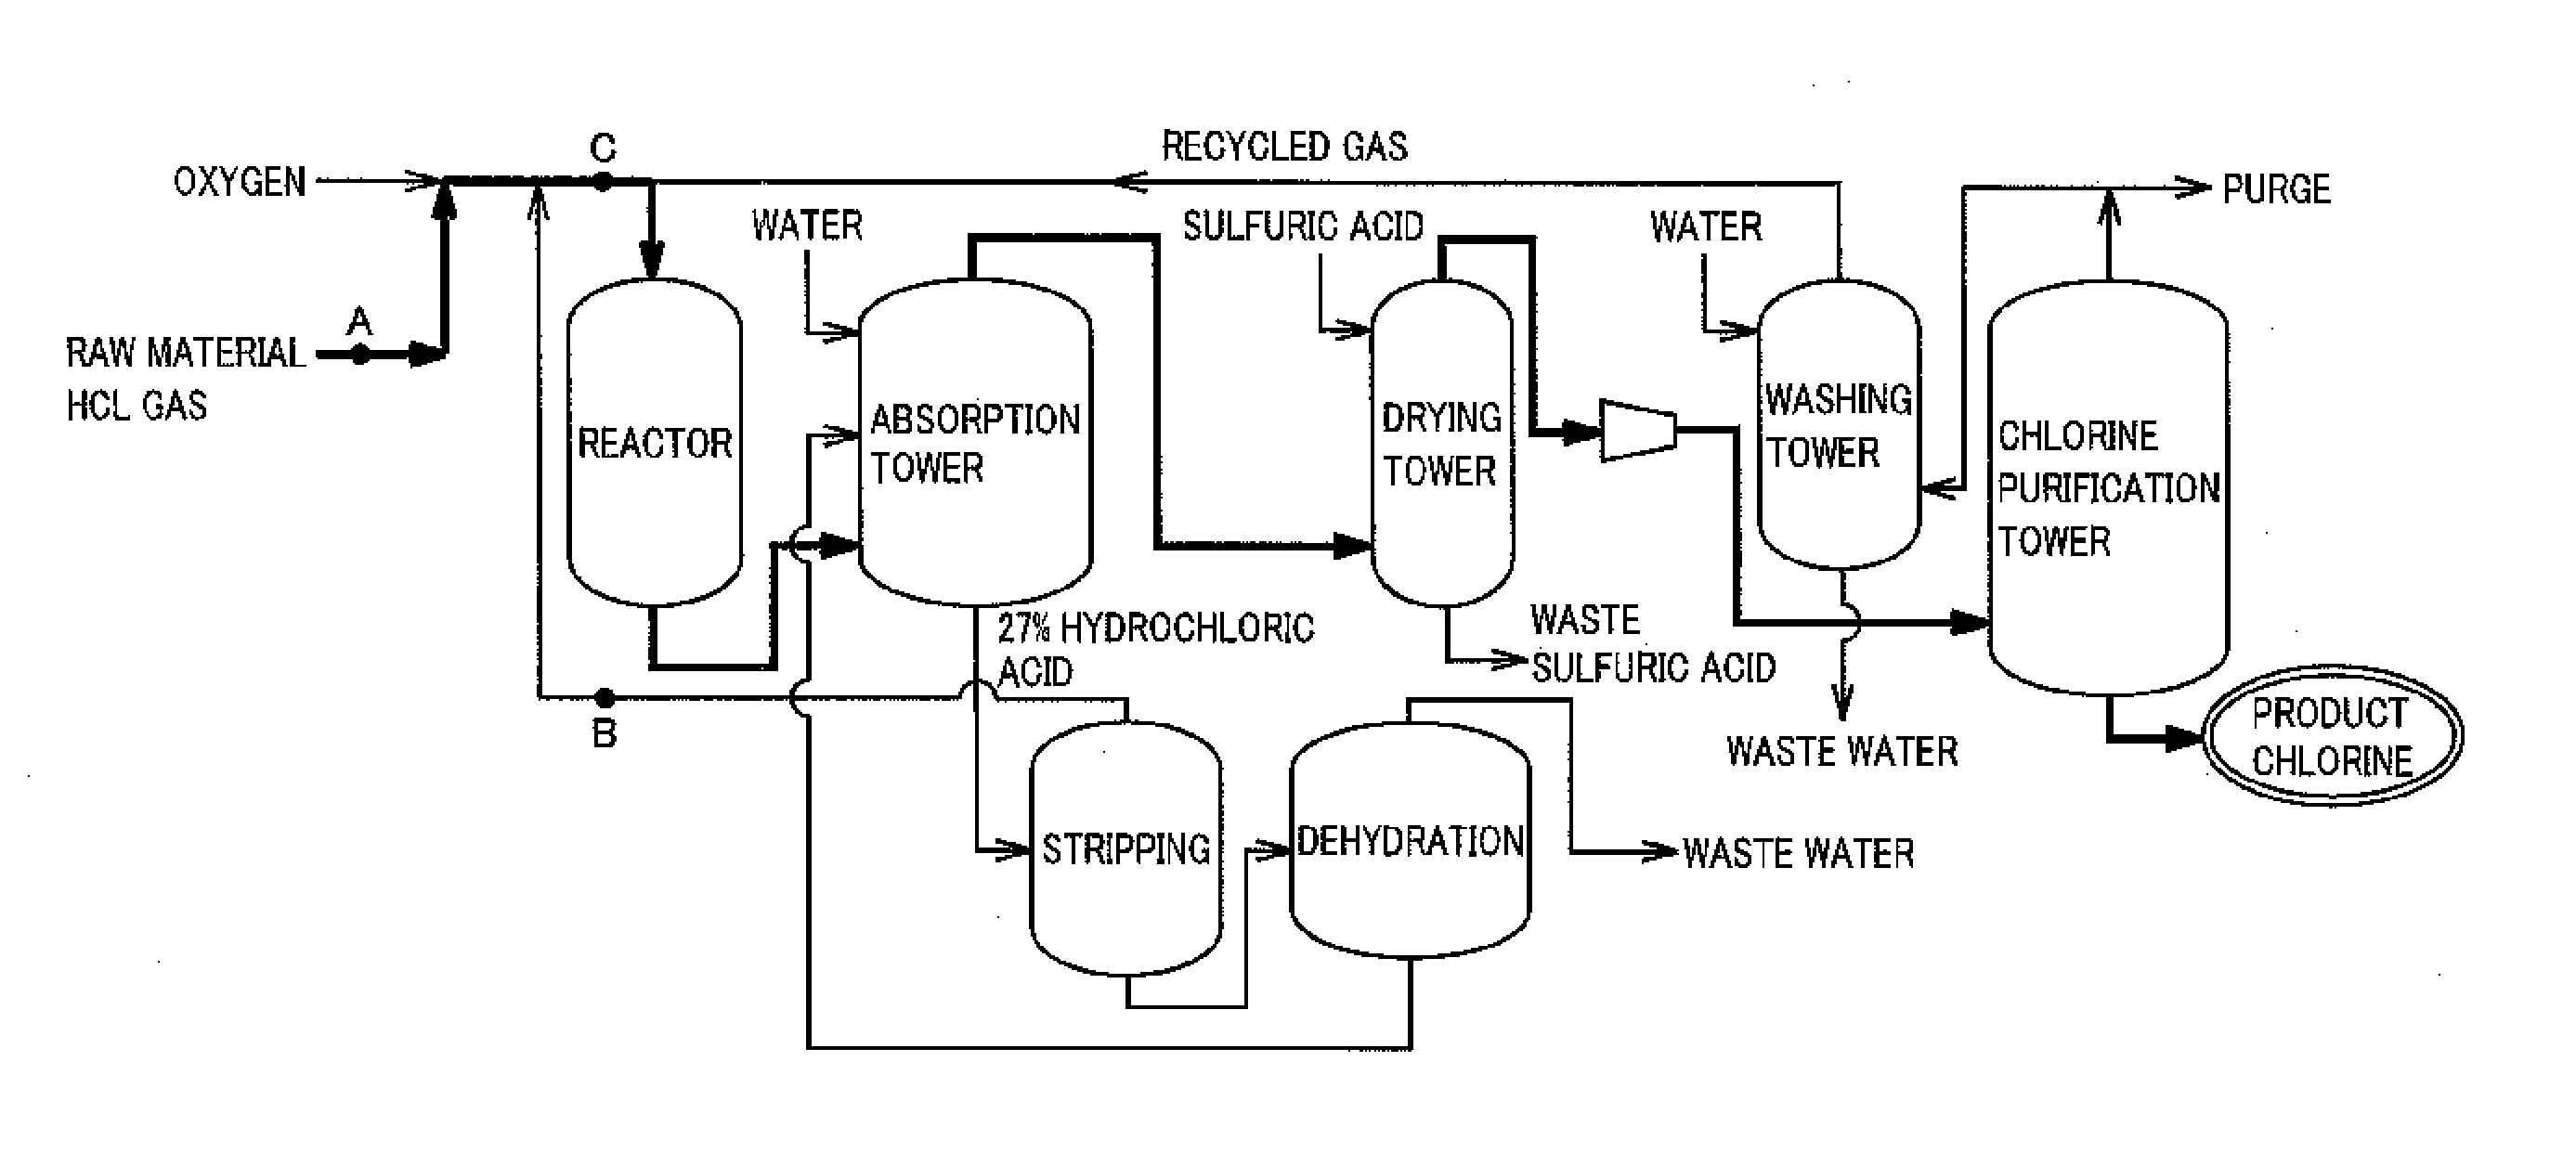 Method for producing chlorine